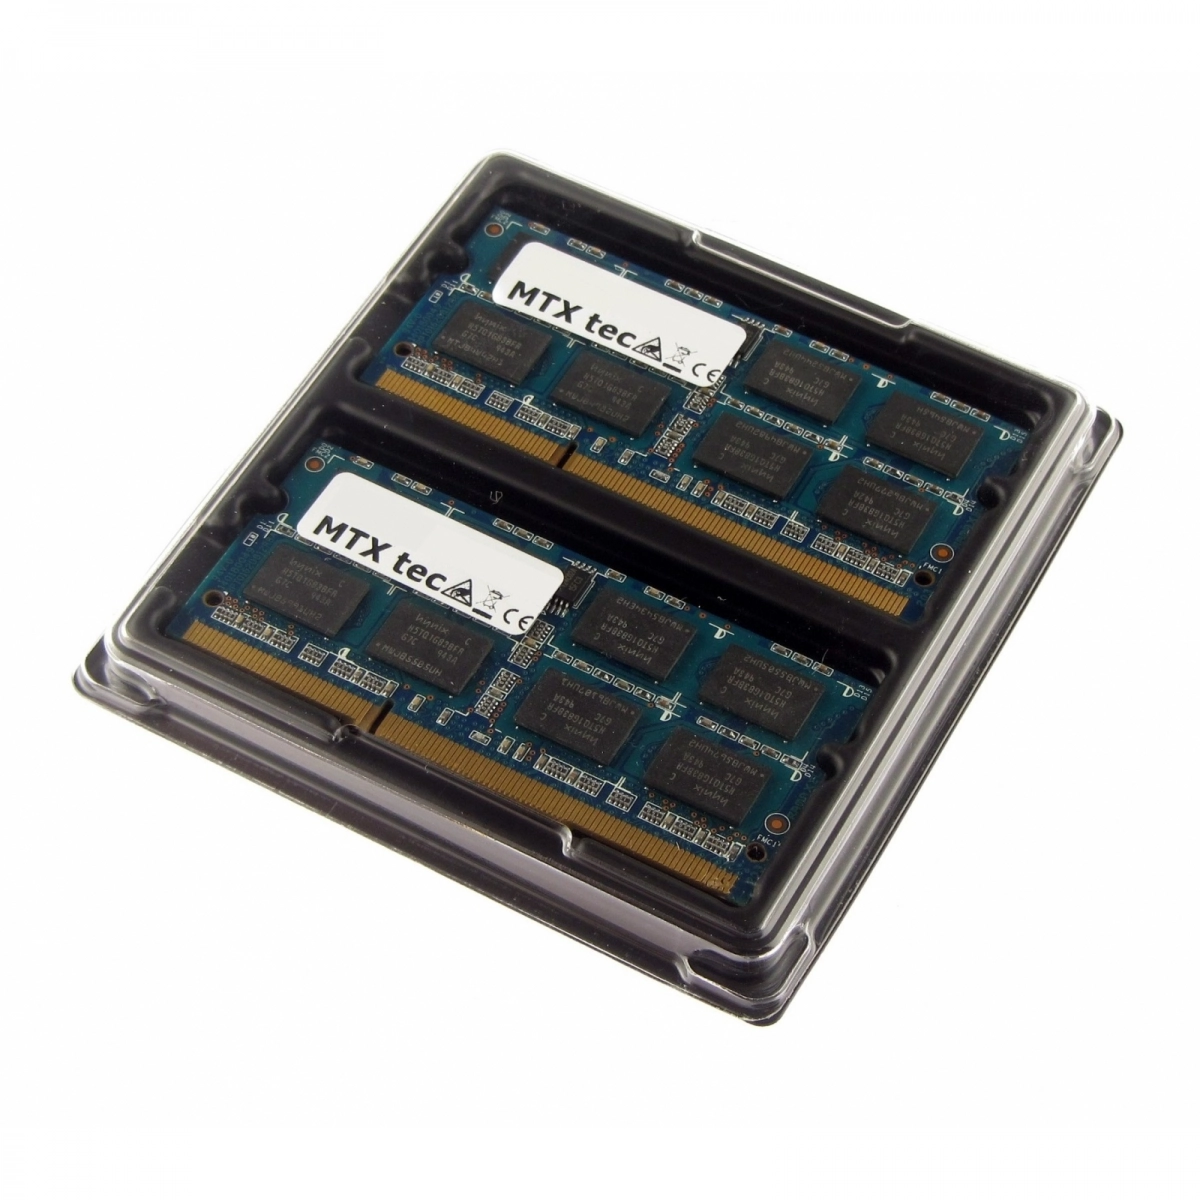 MTXtec 8GB Kit 2x 4GB DDR3 1066MHz SODIMM DDR3 PC3-8500, 204 Pin RAM Laptop-Speicher